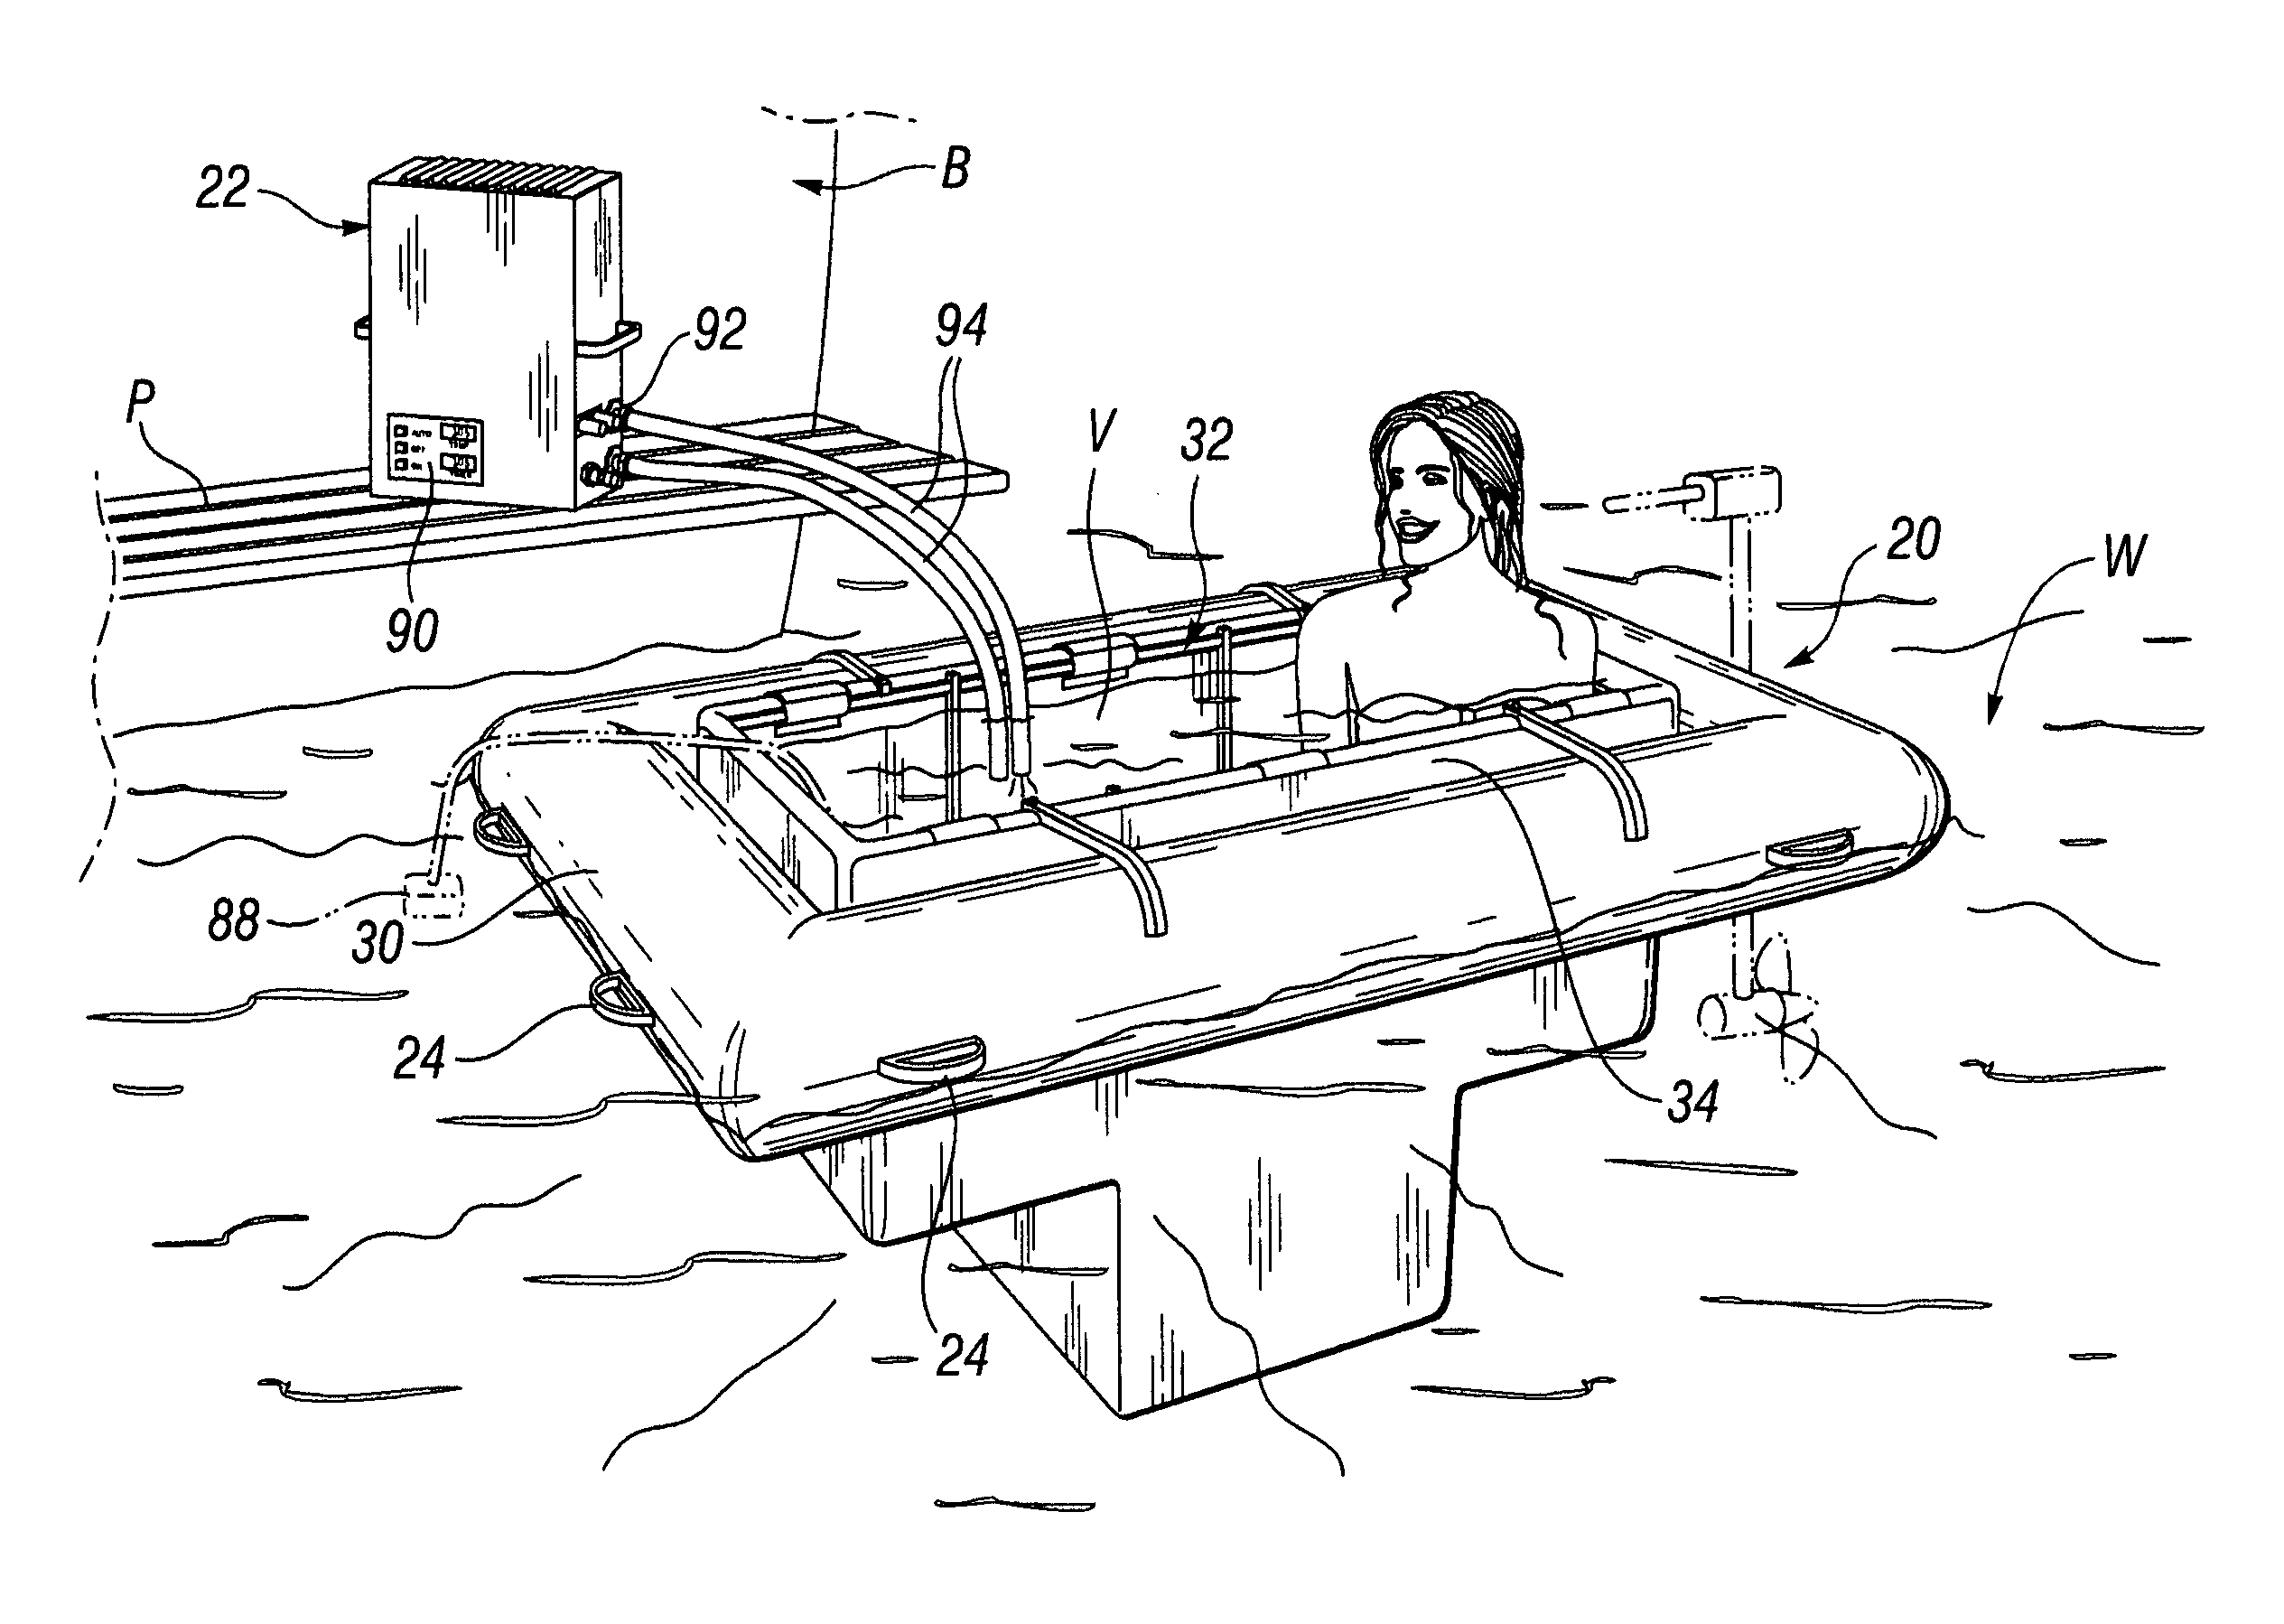 Portable floating hot tub